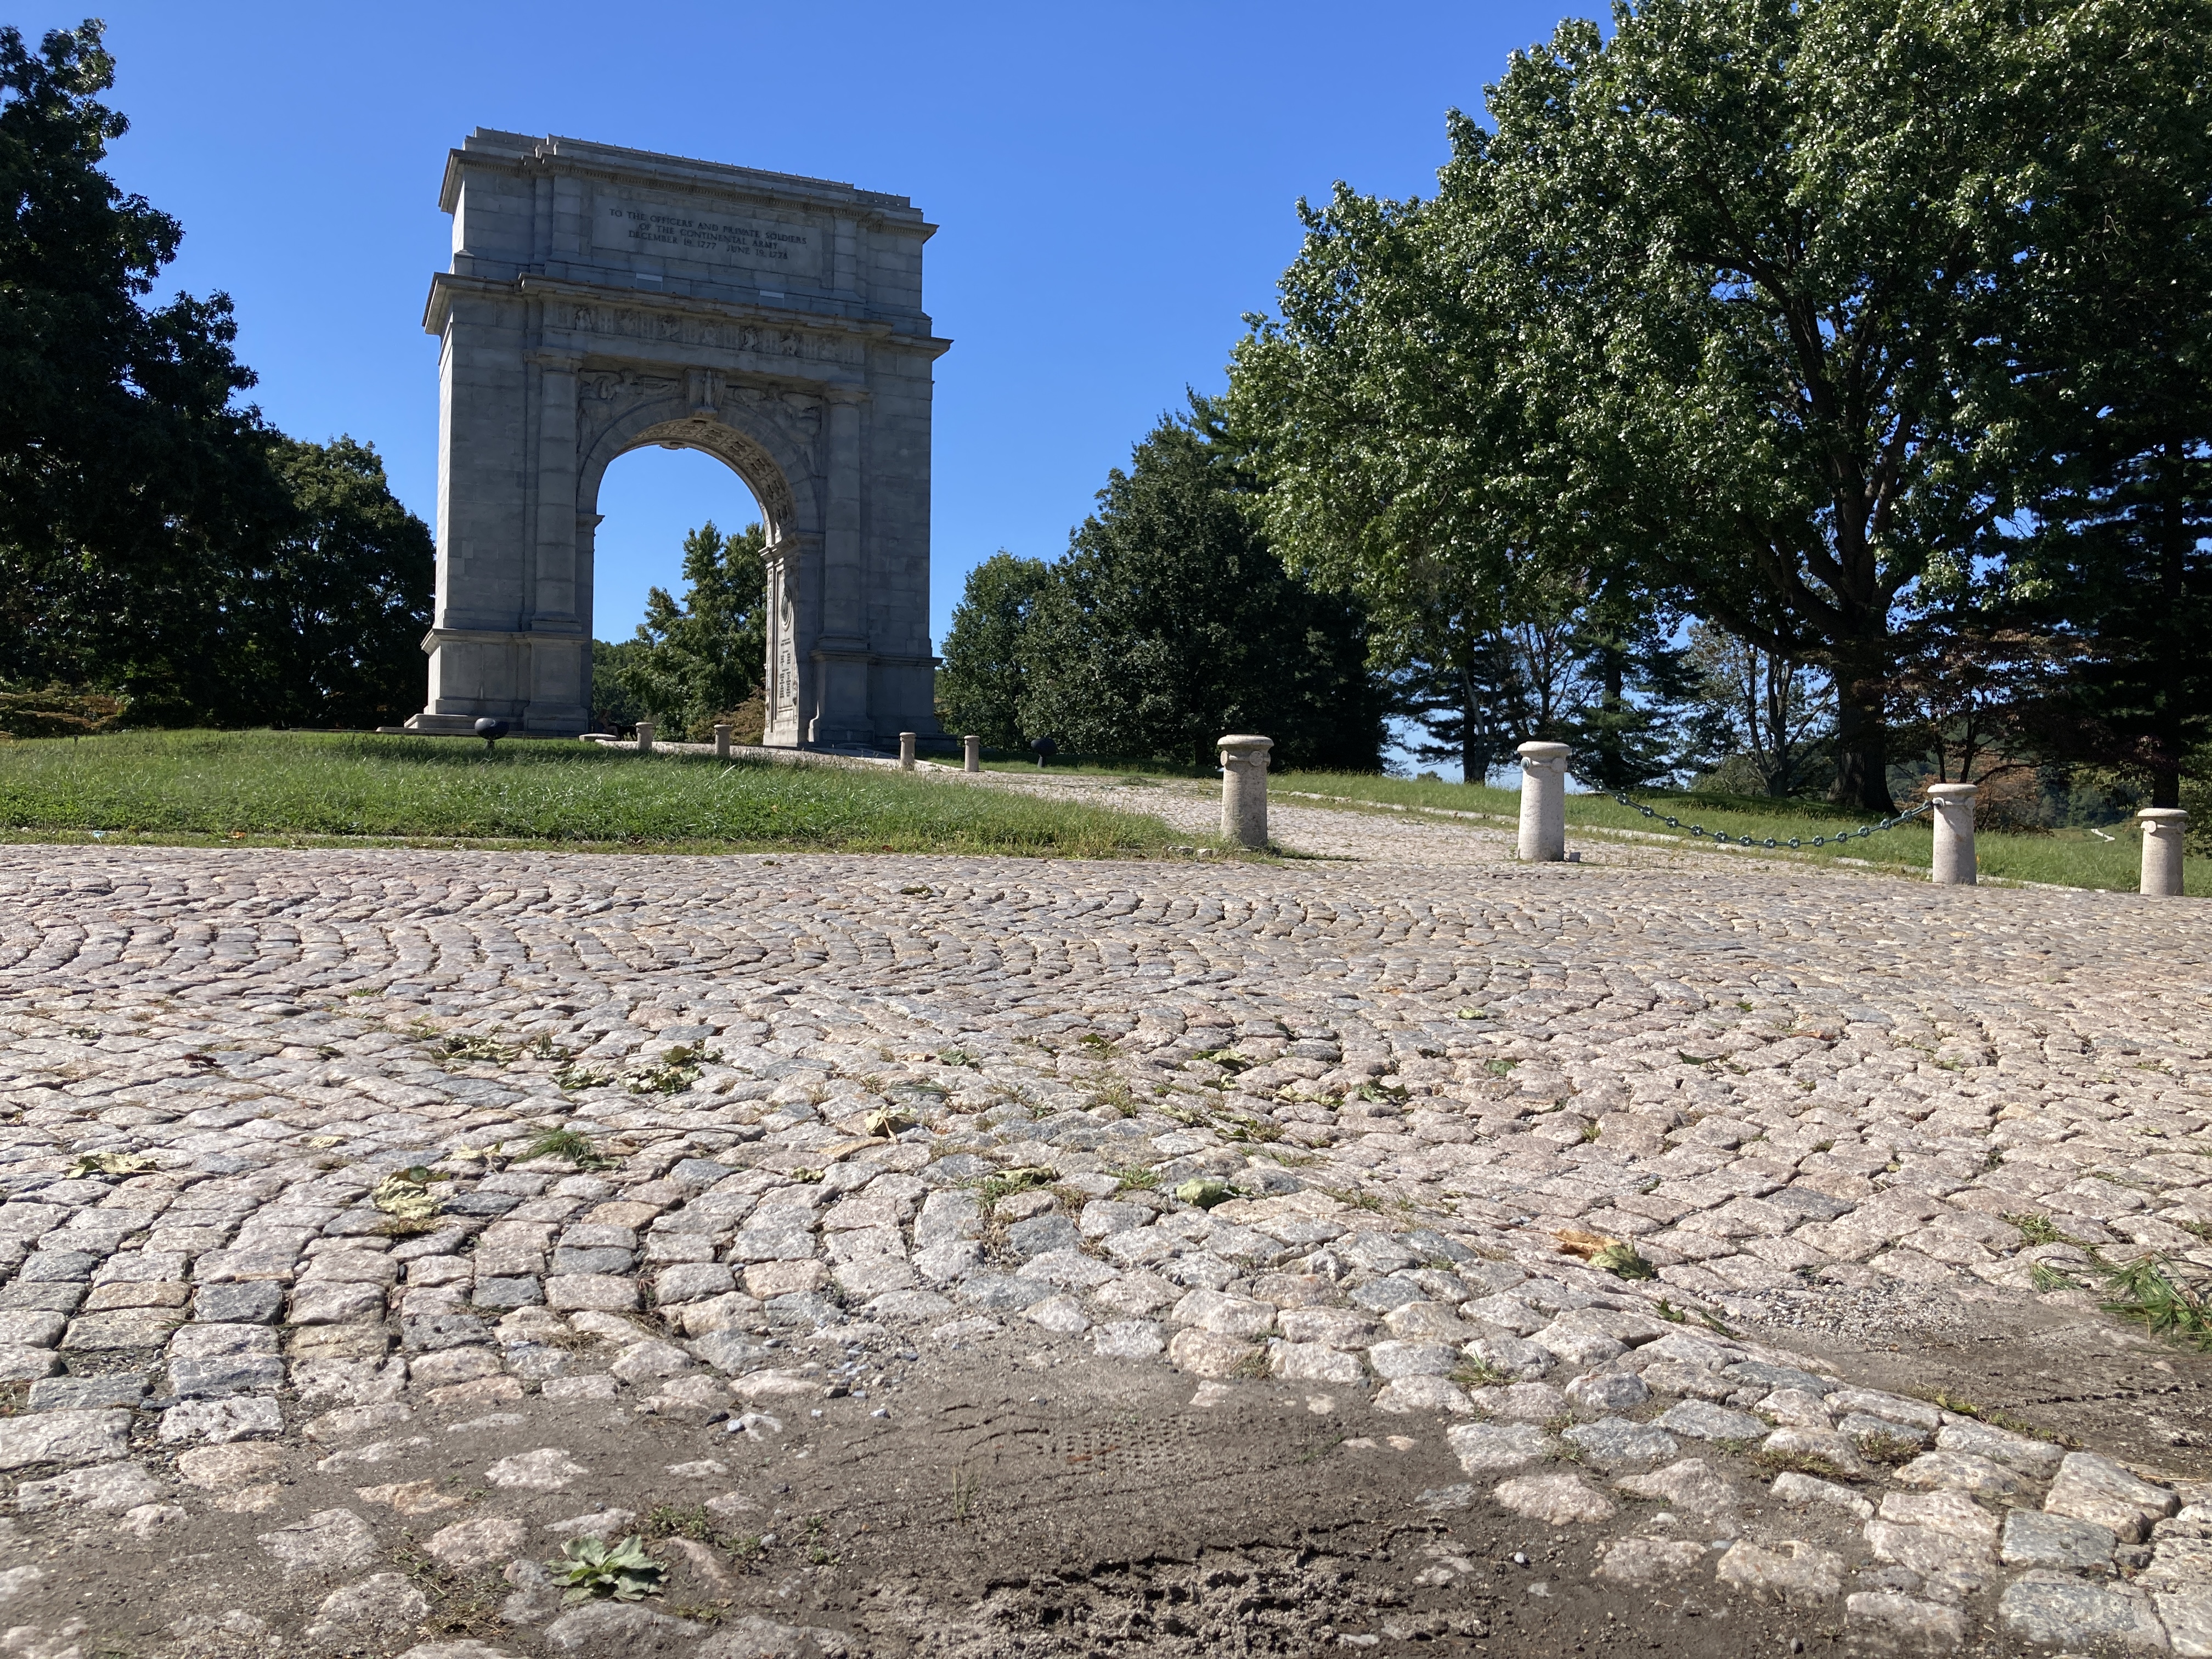 photograph, outdoors, cobblestones, National Memorial Arch